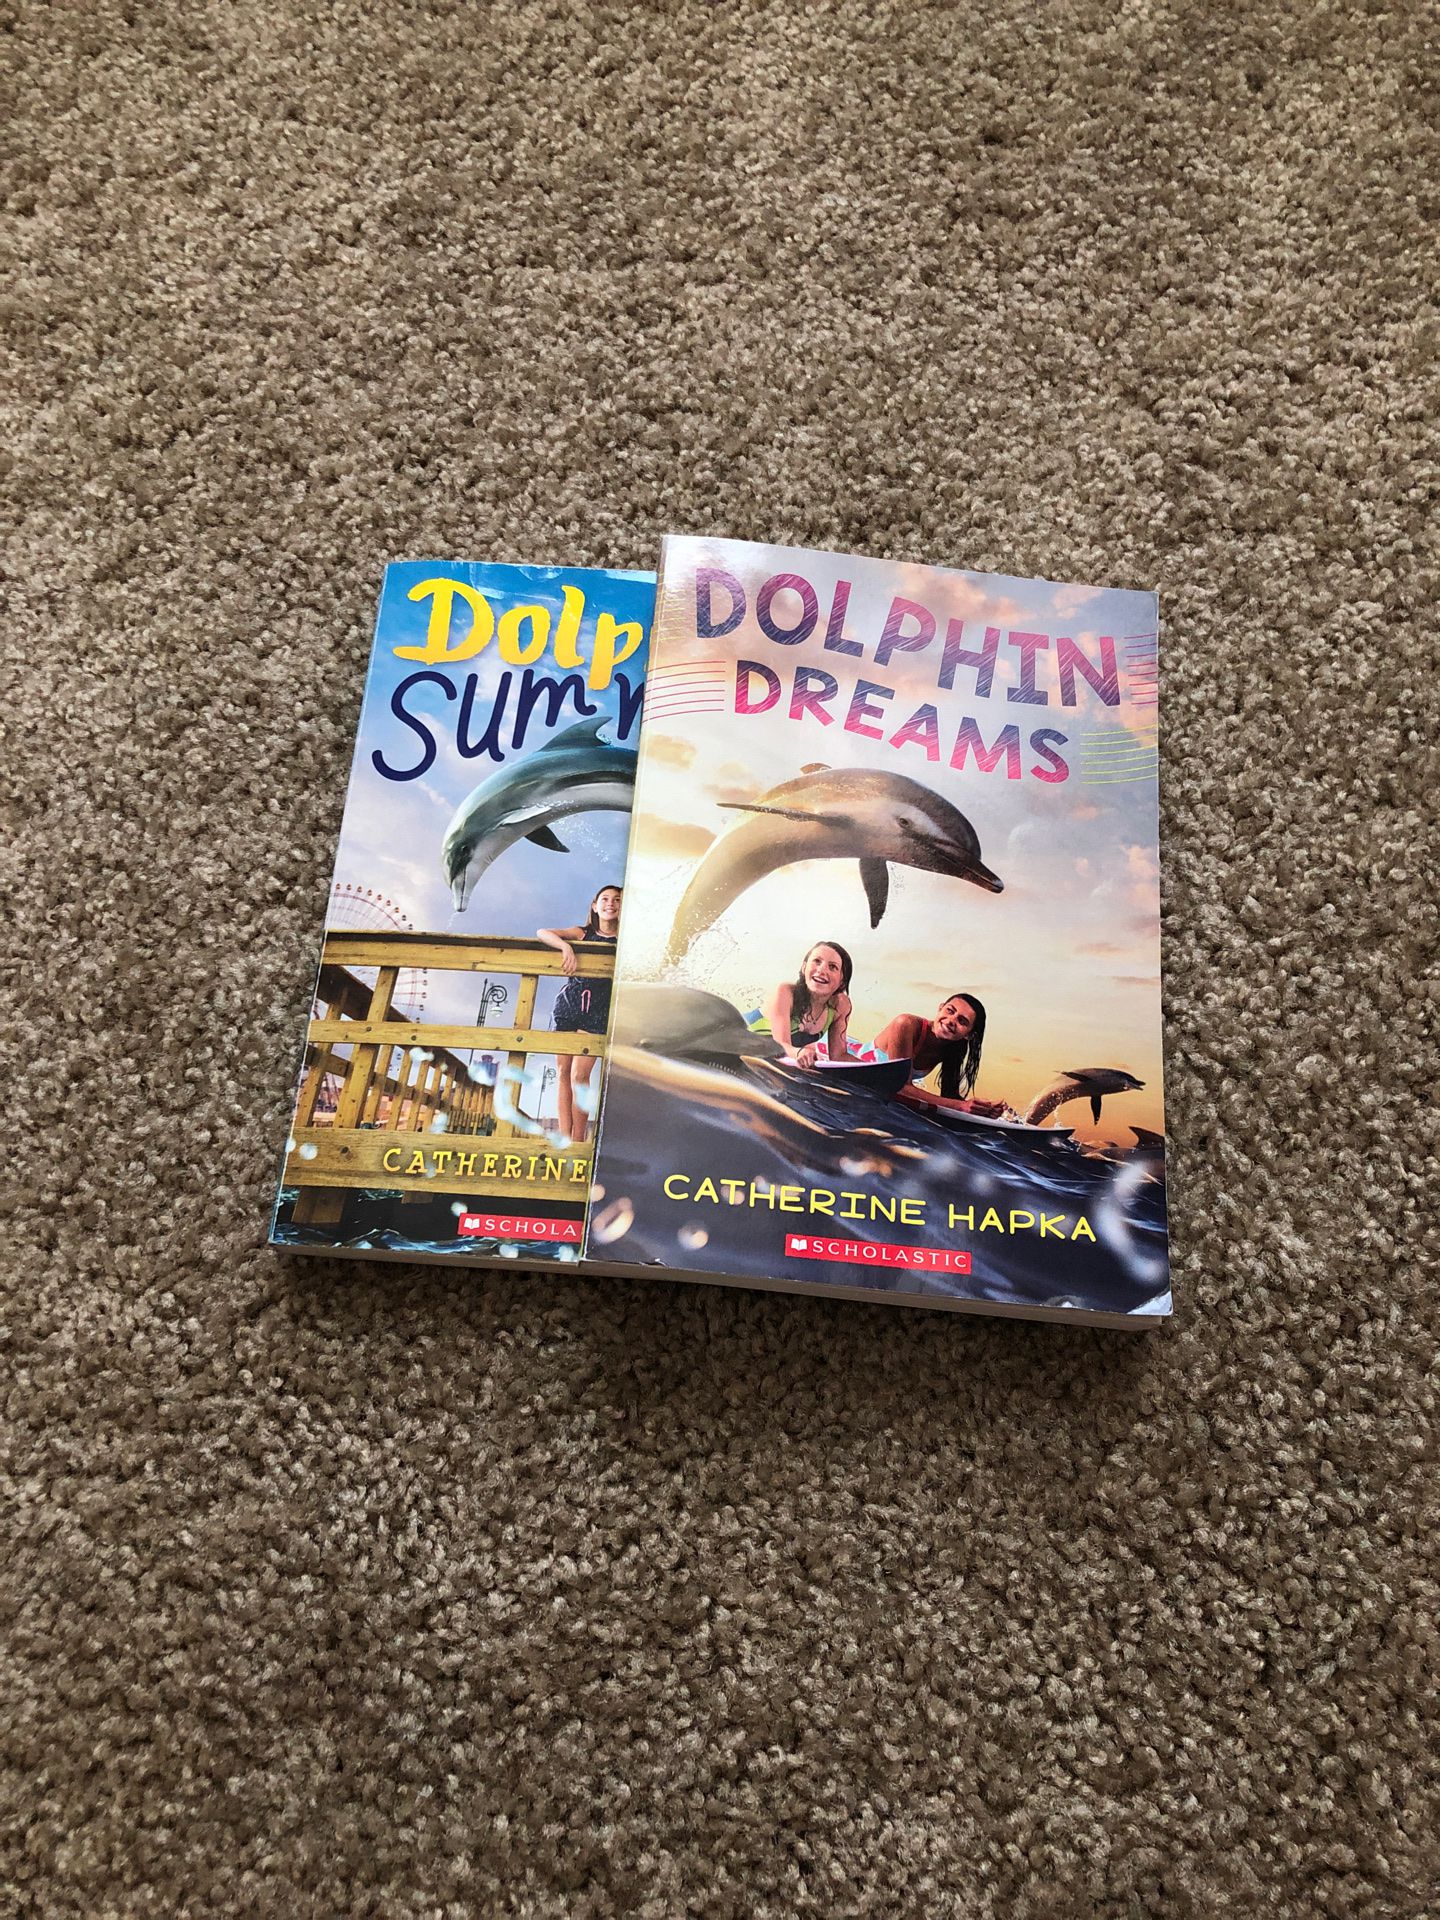 Dolphin summer and Dolphin dreams, Author: Catherine Hapka